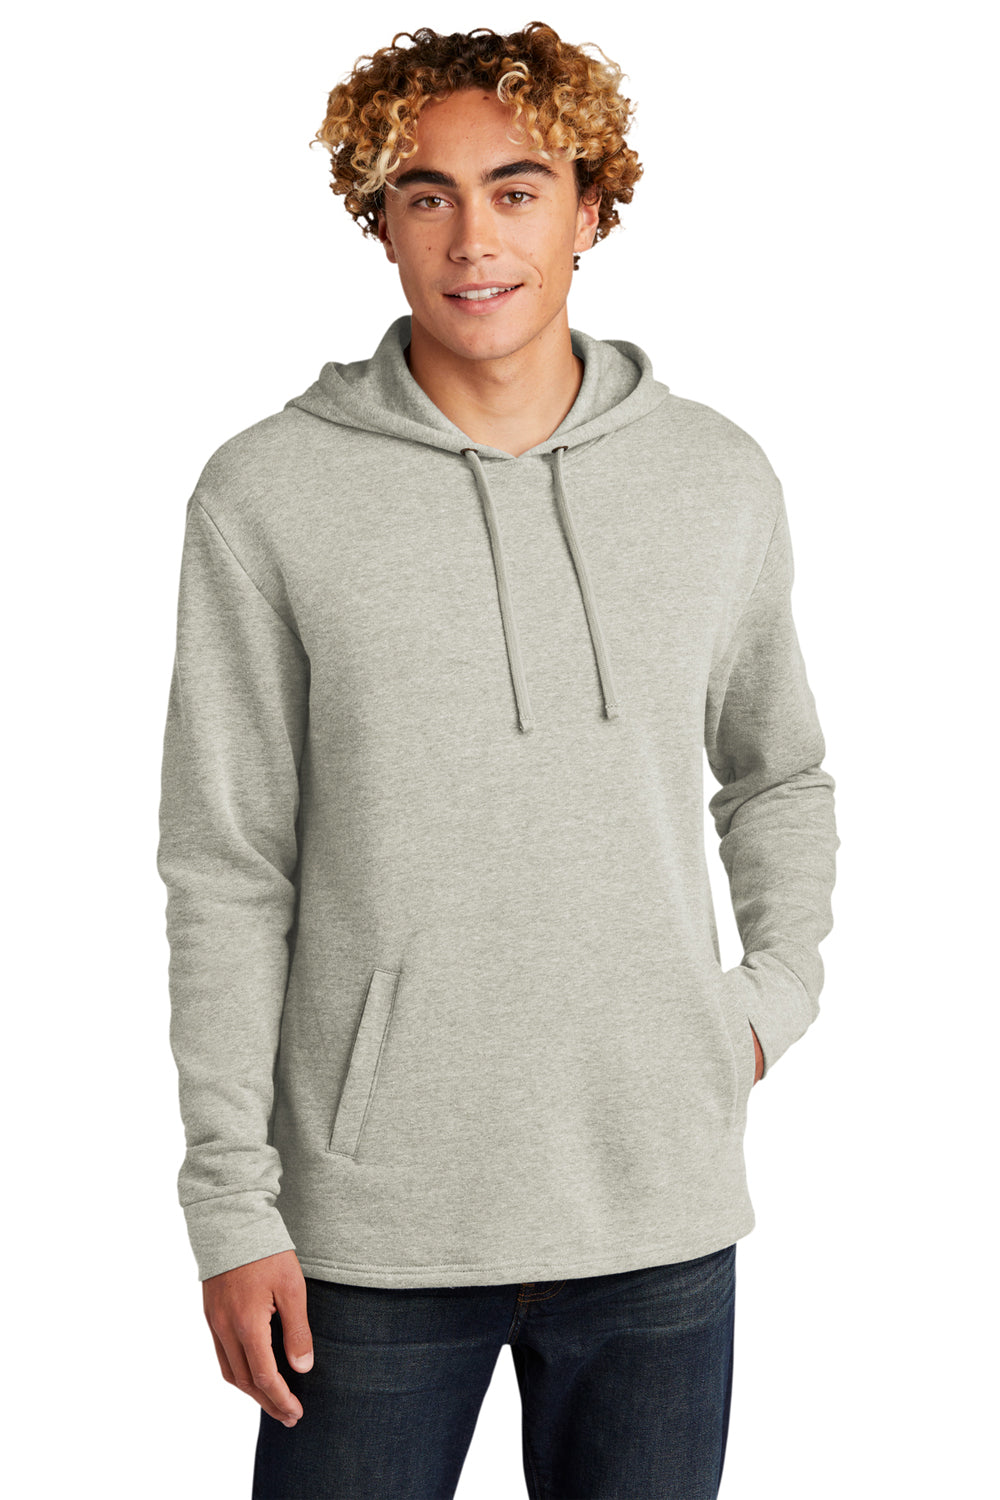 Next Level NL9300/9300 Mens PCH Fleece Hooded Sweatshirt Hoodie Oatmeal Front